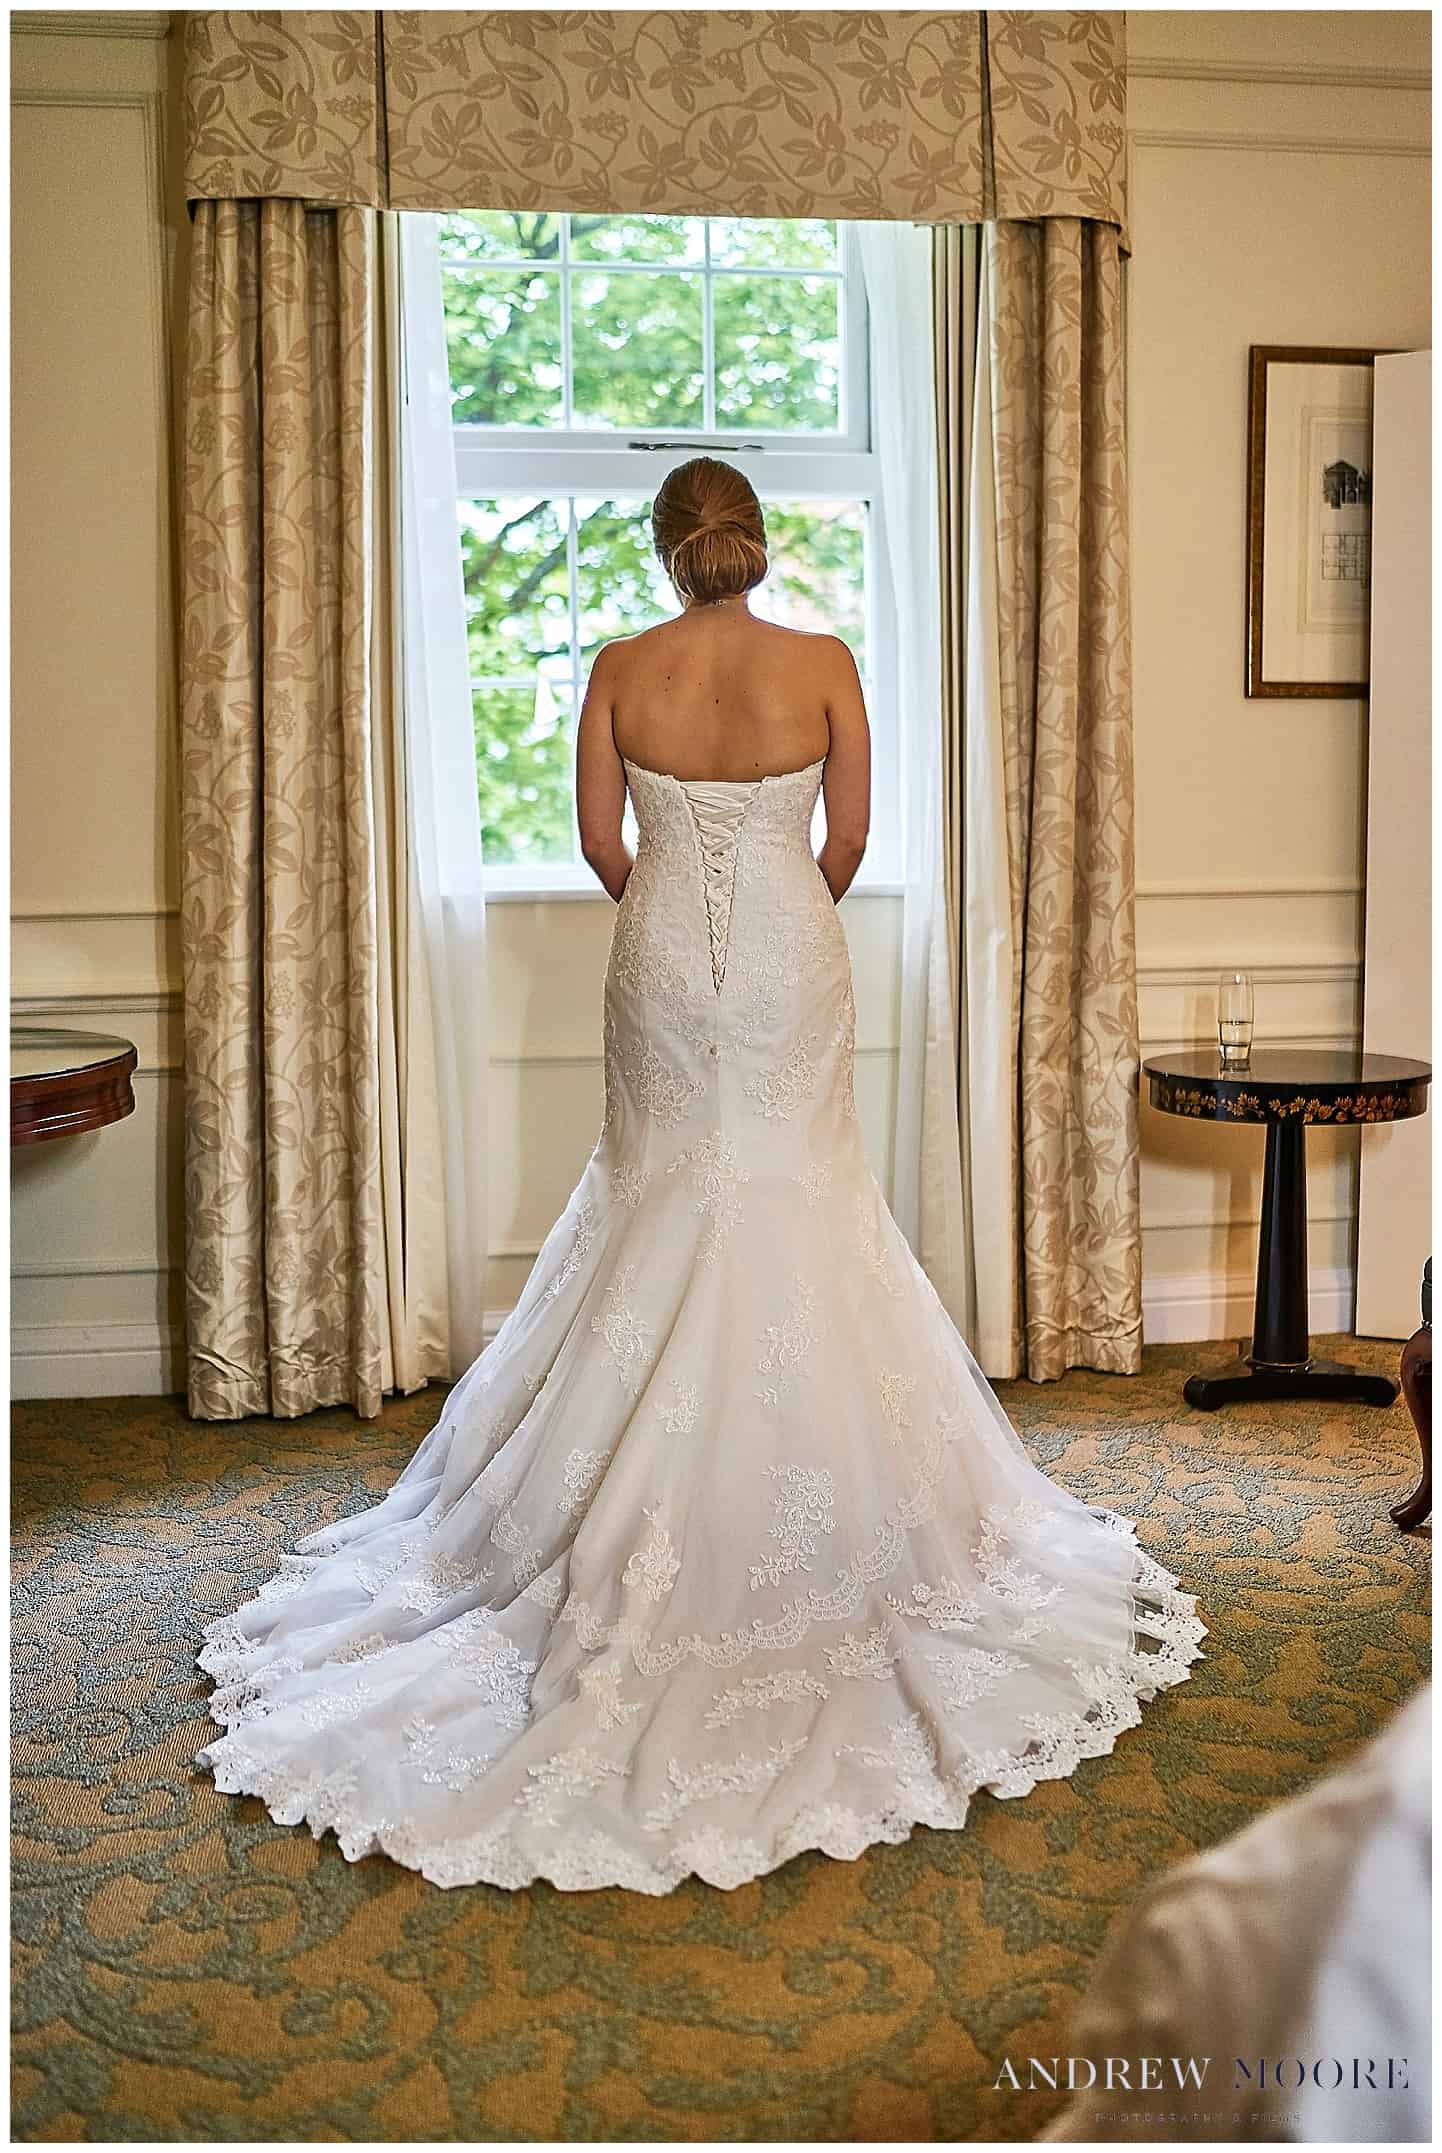 beautiful wedding dress bride stood in window